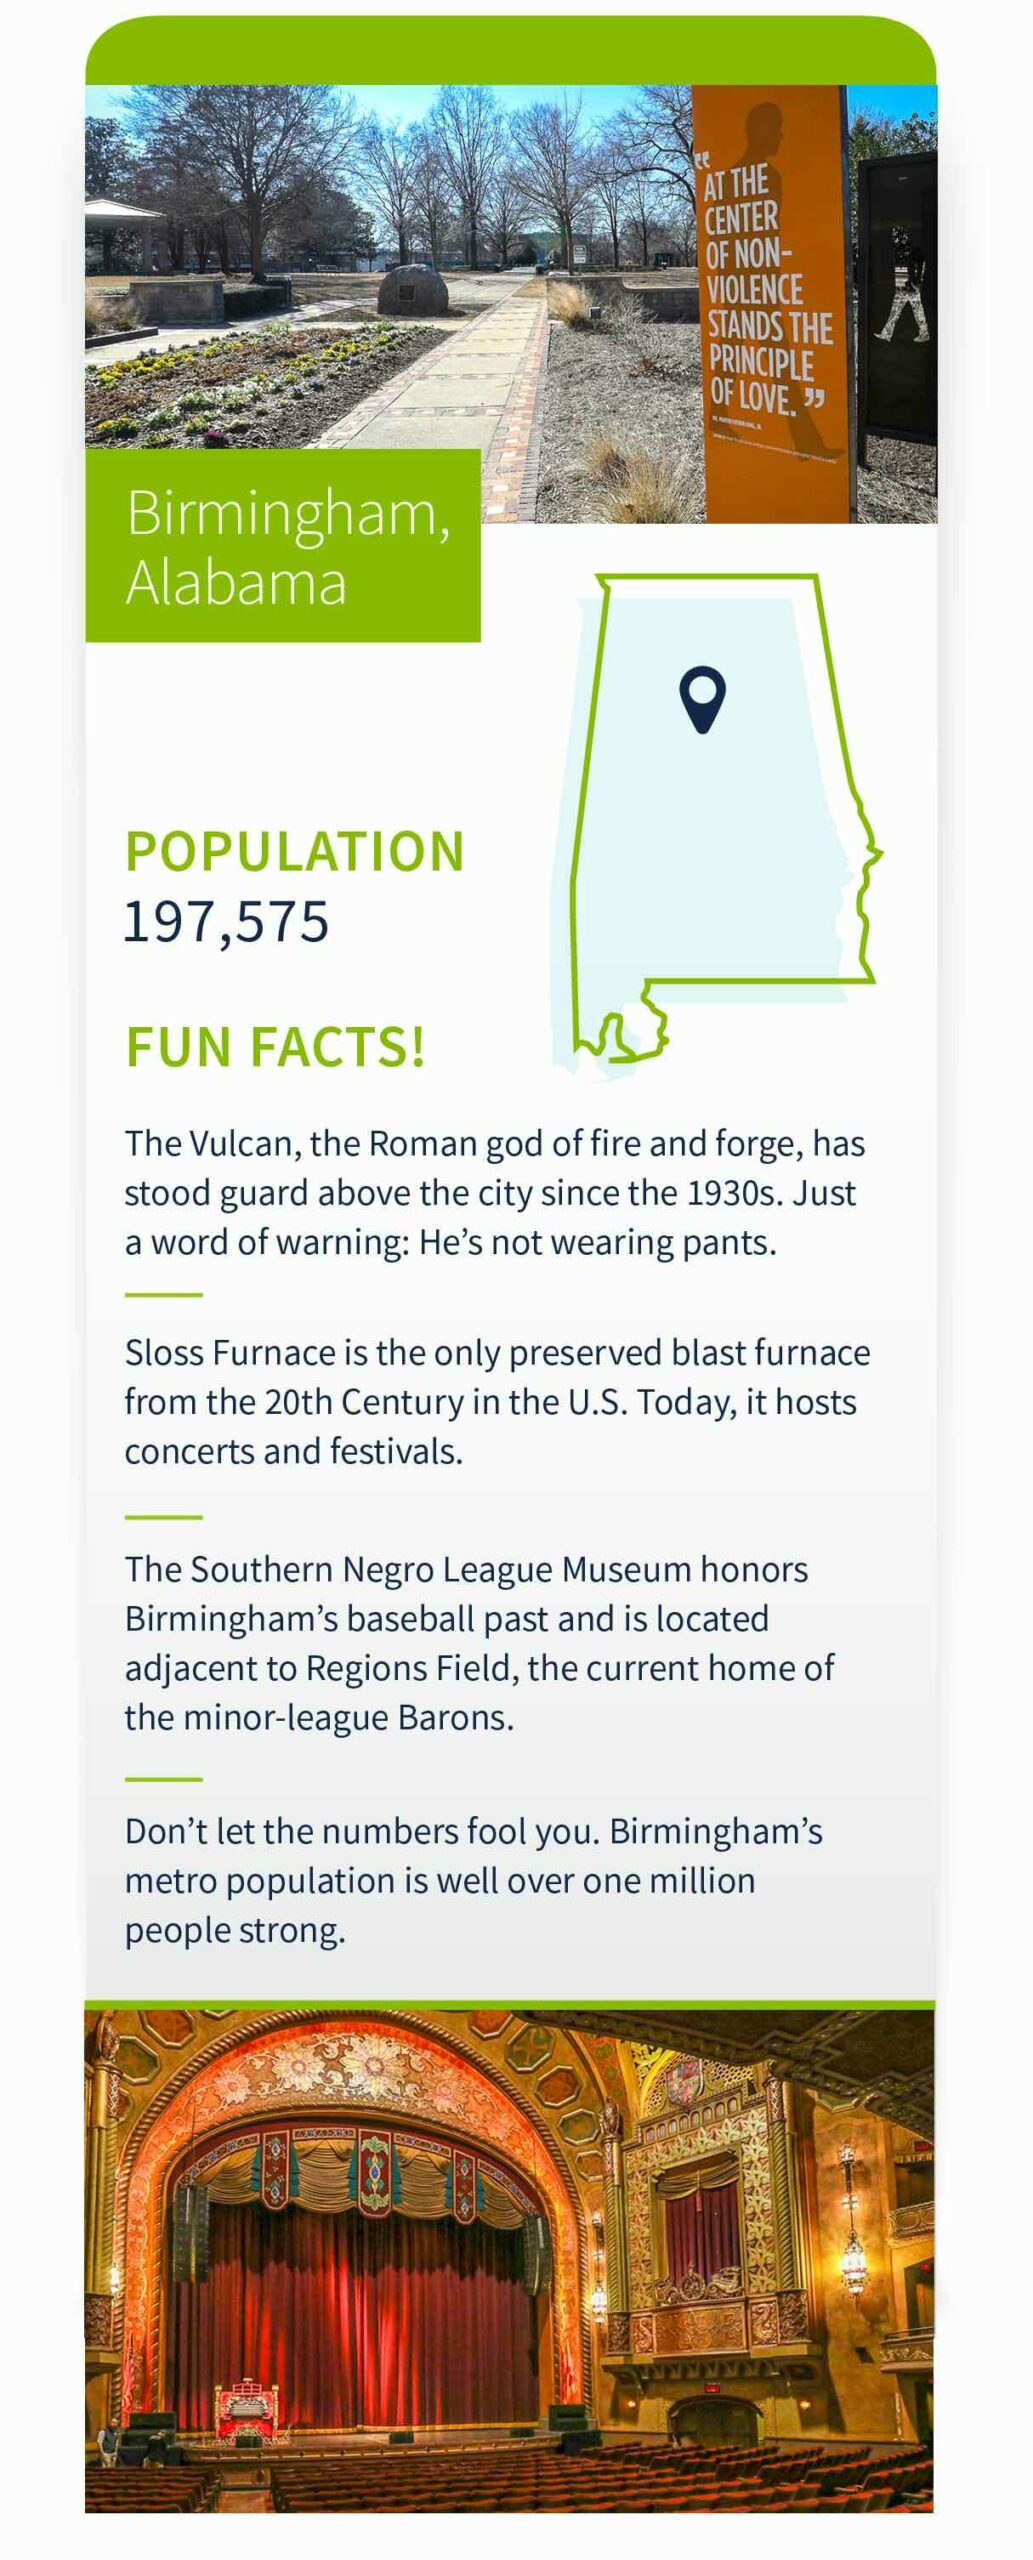 Fun Facts infographic about Birmingham Alabama